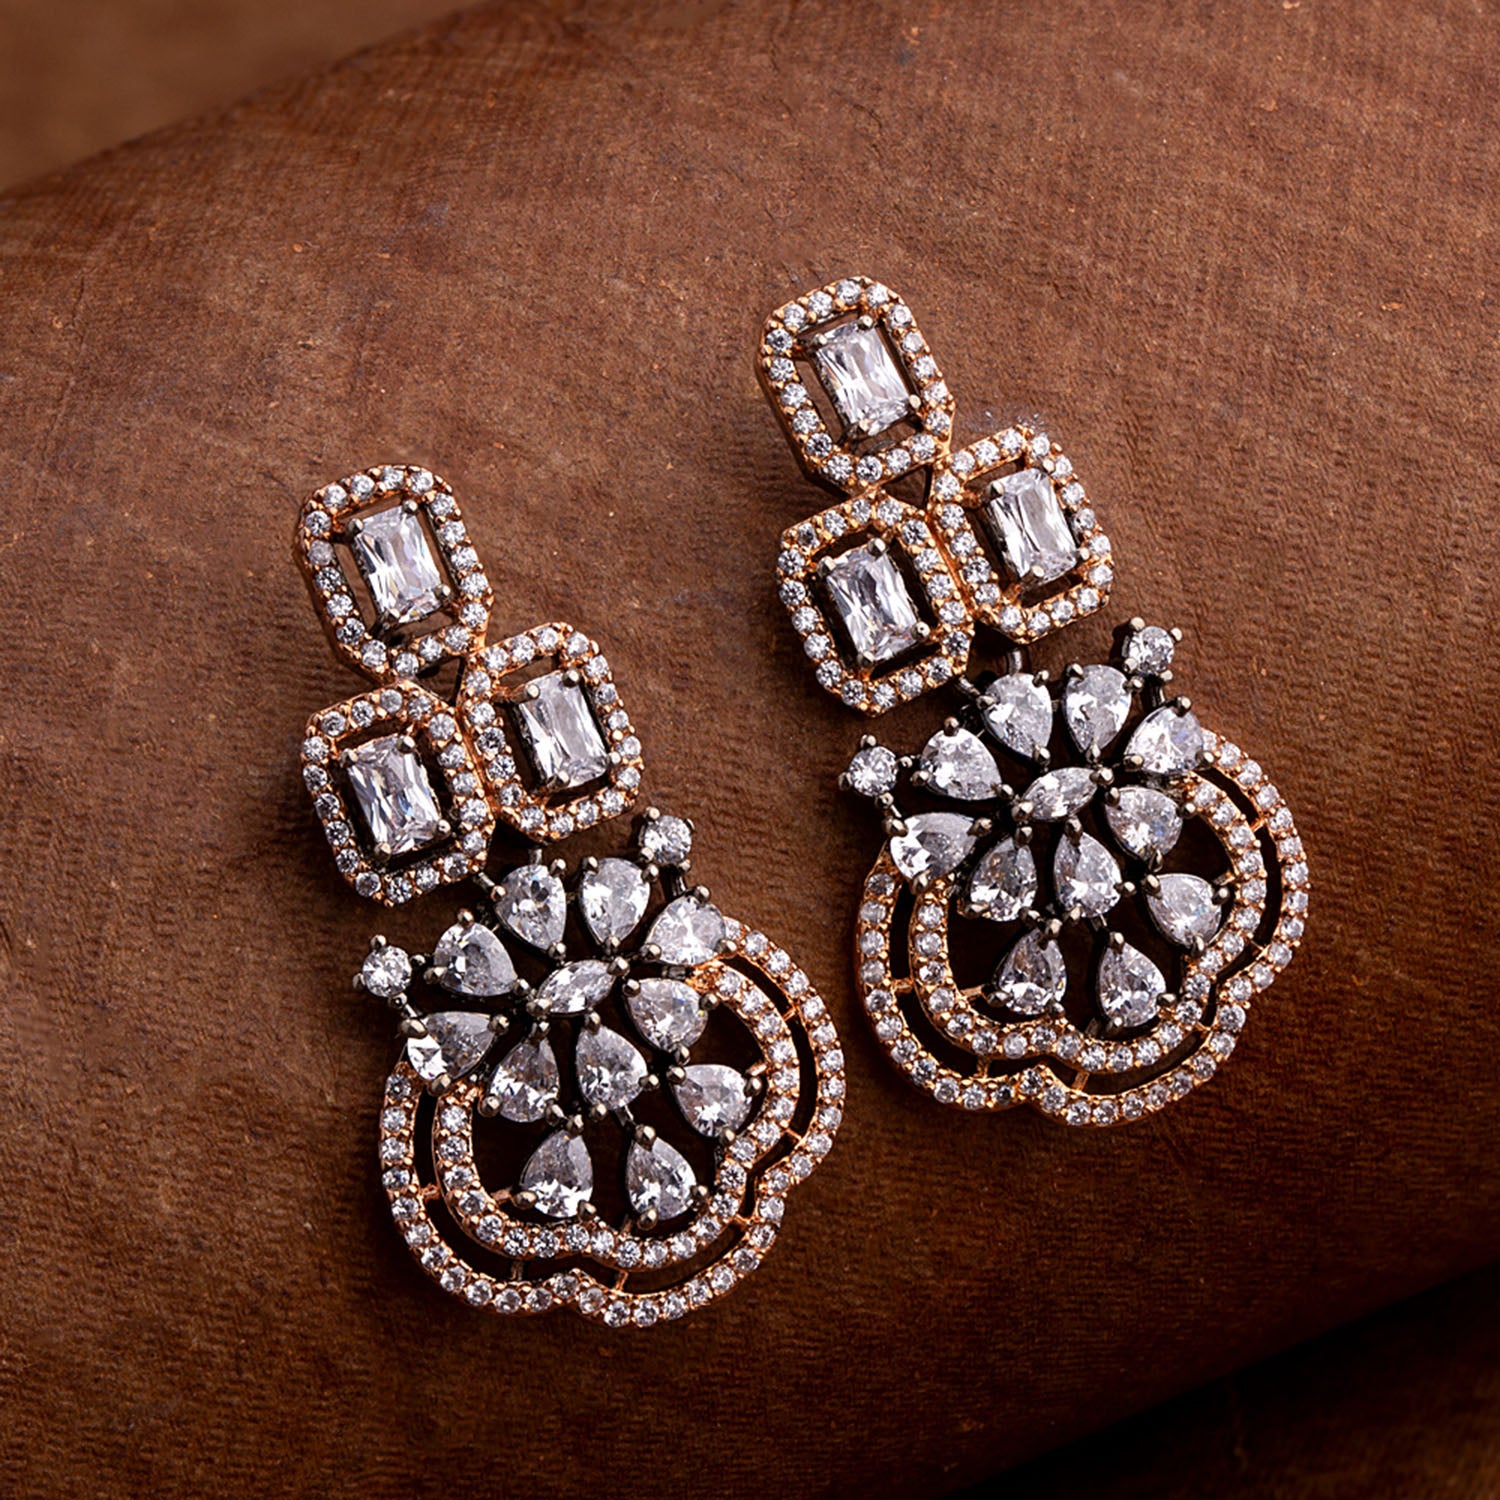 Black Rhodium Plated American Diamond Gems Adorned Earrings